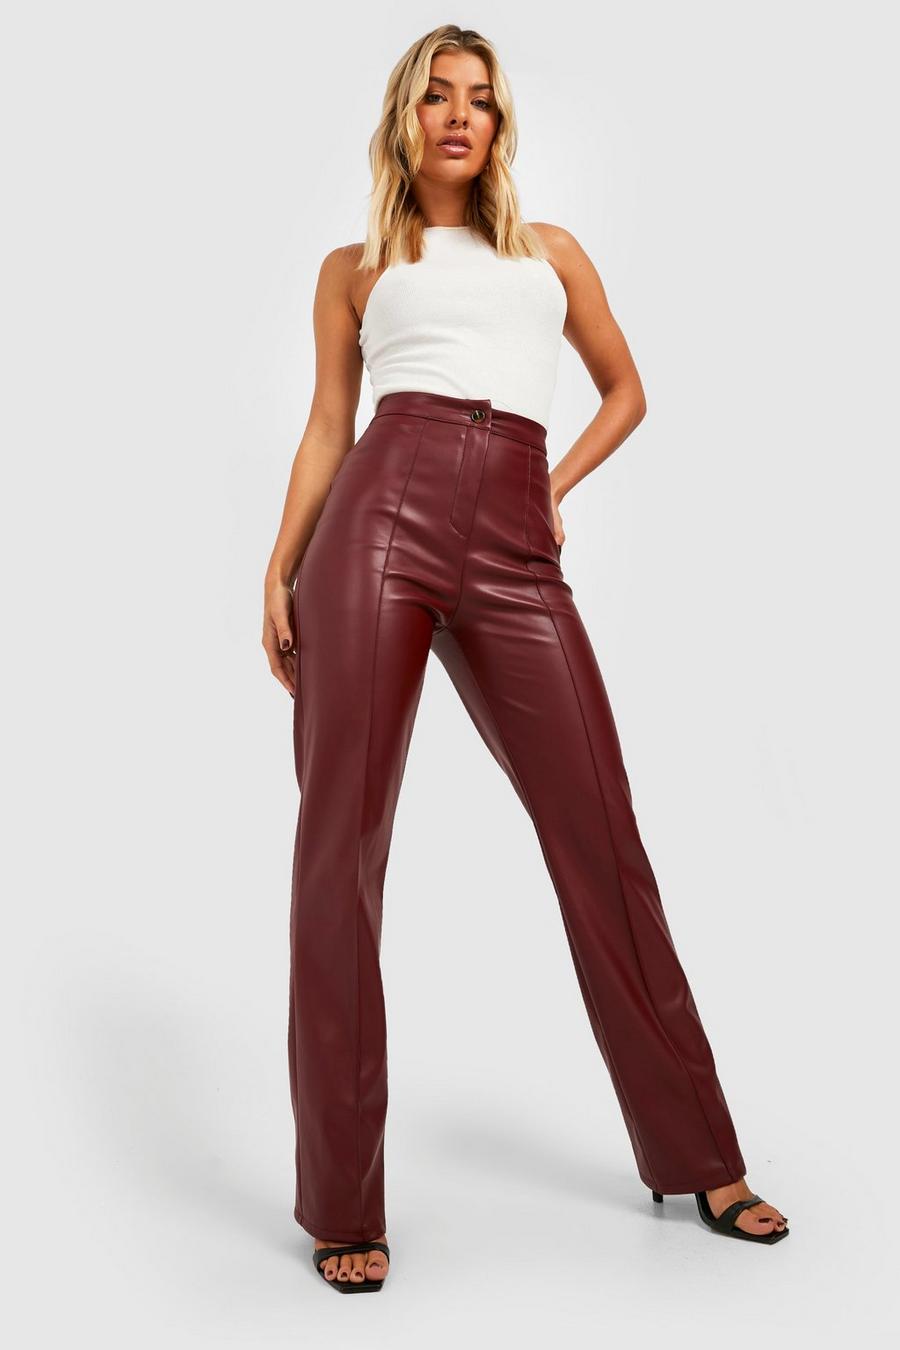 https://media.boohoo.com/i/boohoo/gzz30859_oxblood_xl/female-oxblood-faux-leather-tailored-straight-fit-pants/?w=900&qlt=default&fmt.jp2.qlt=70&fmt=auto&sm=fit